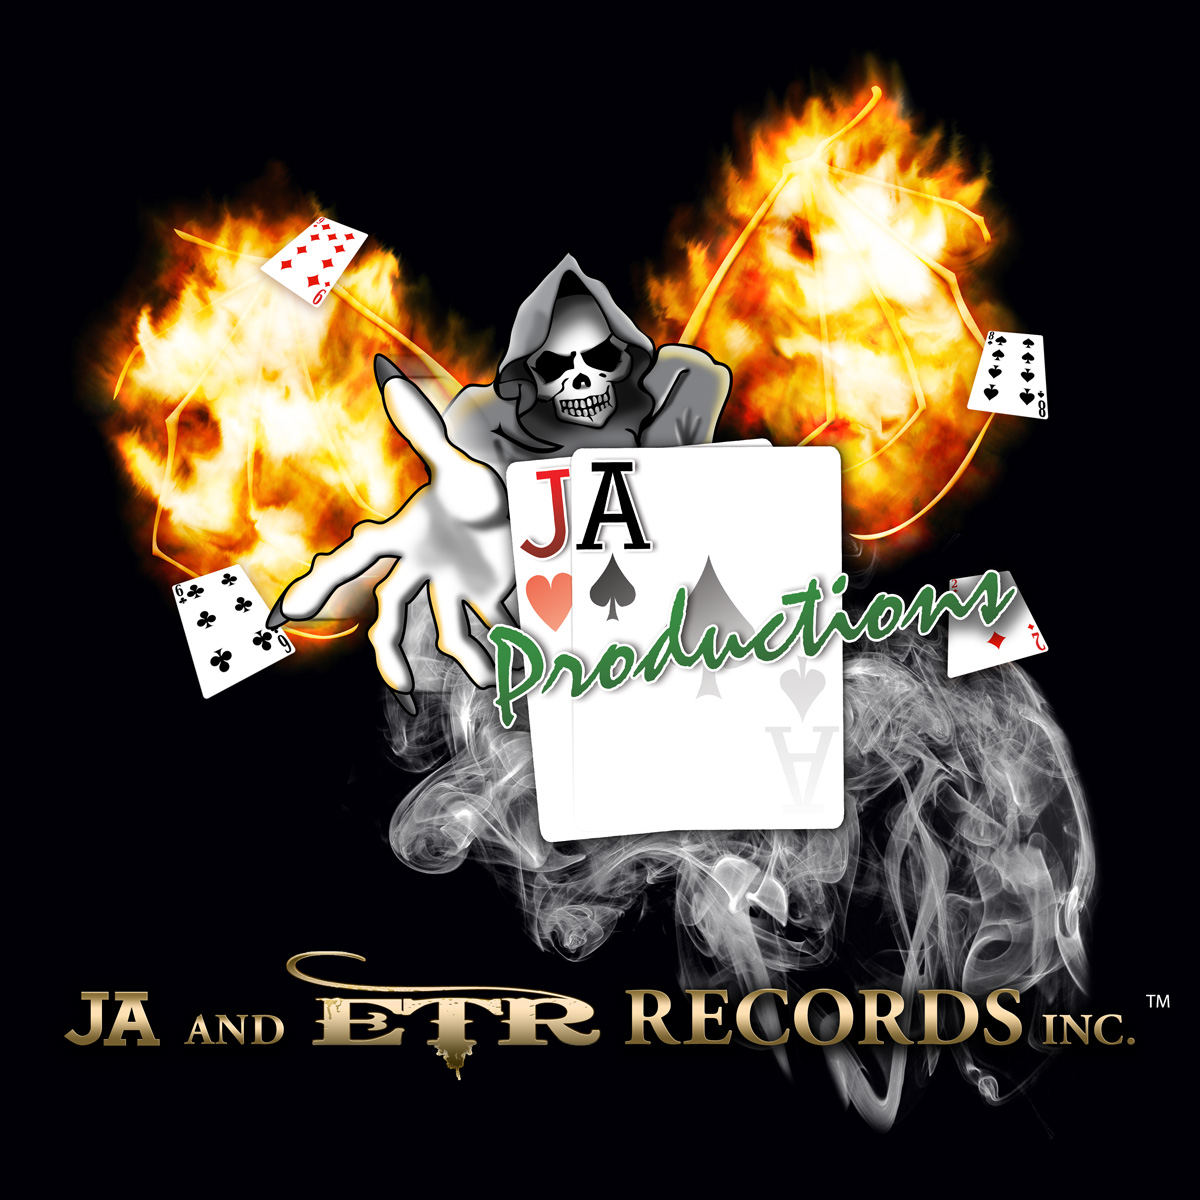 JA and ETR Records Inc.